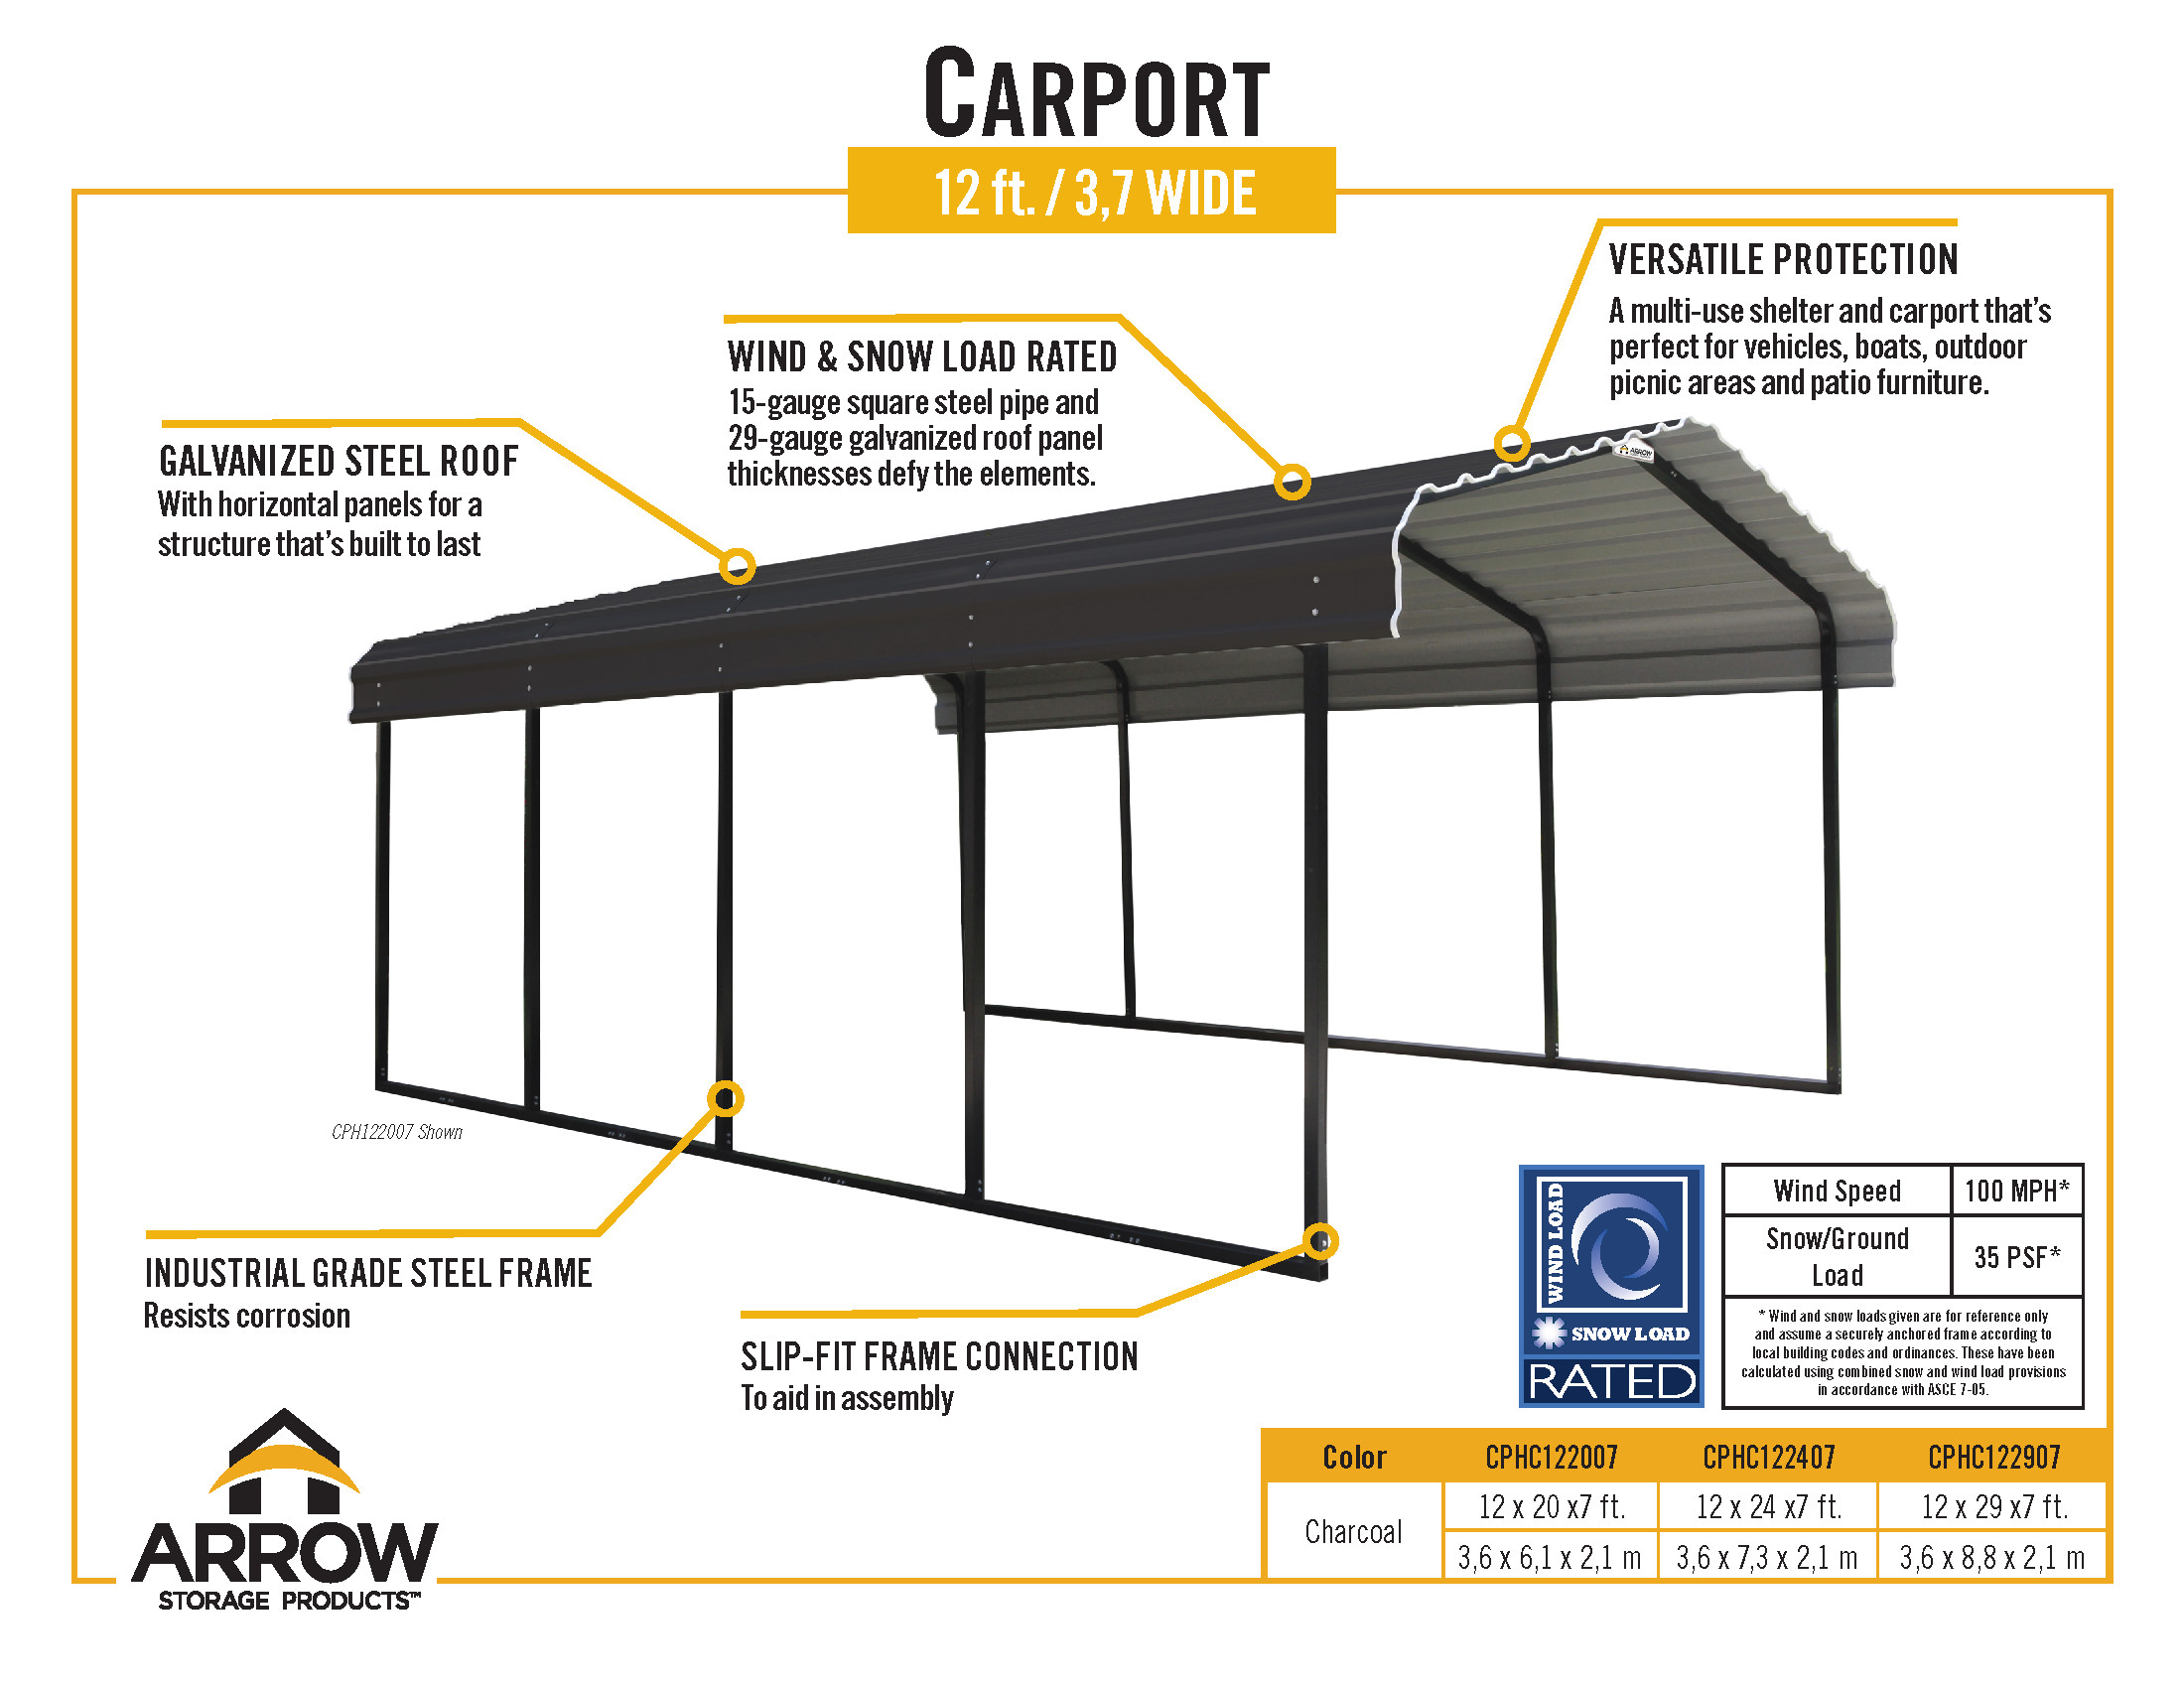 Arrow Carport, 12 ft. x 20 ft. x 7 ft. Charcoal - image 13 of 17